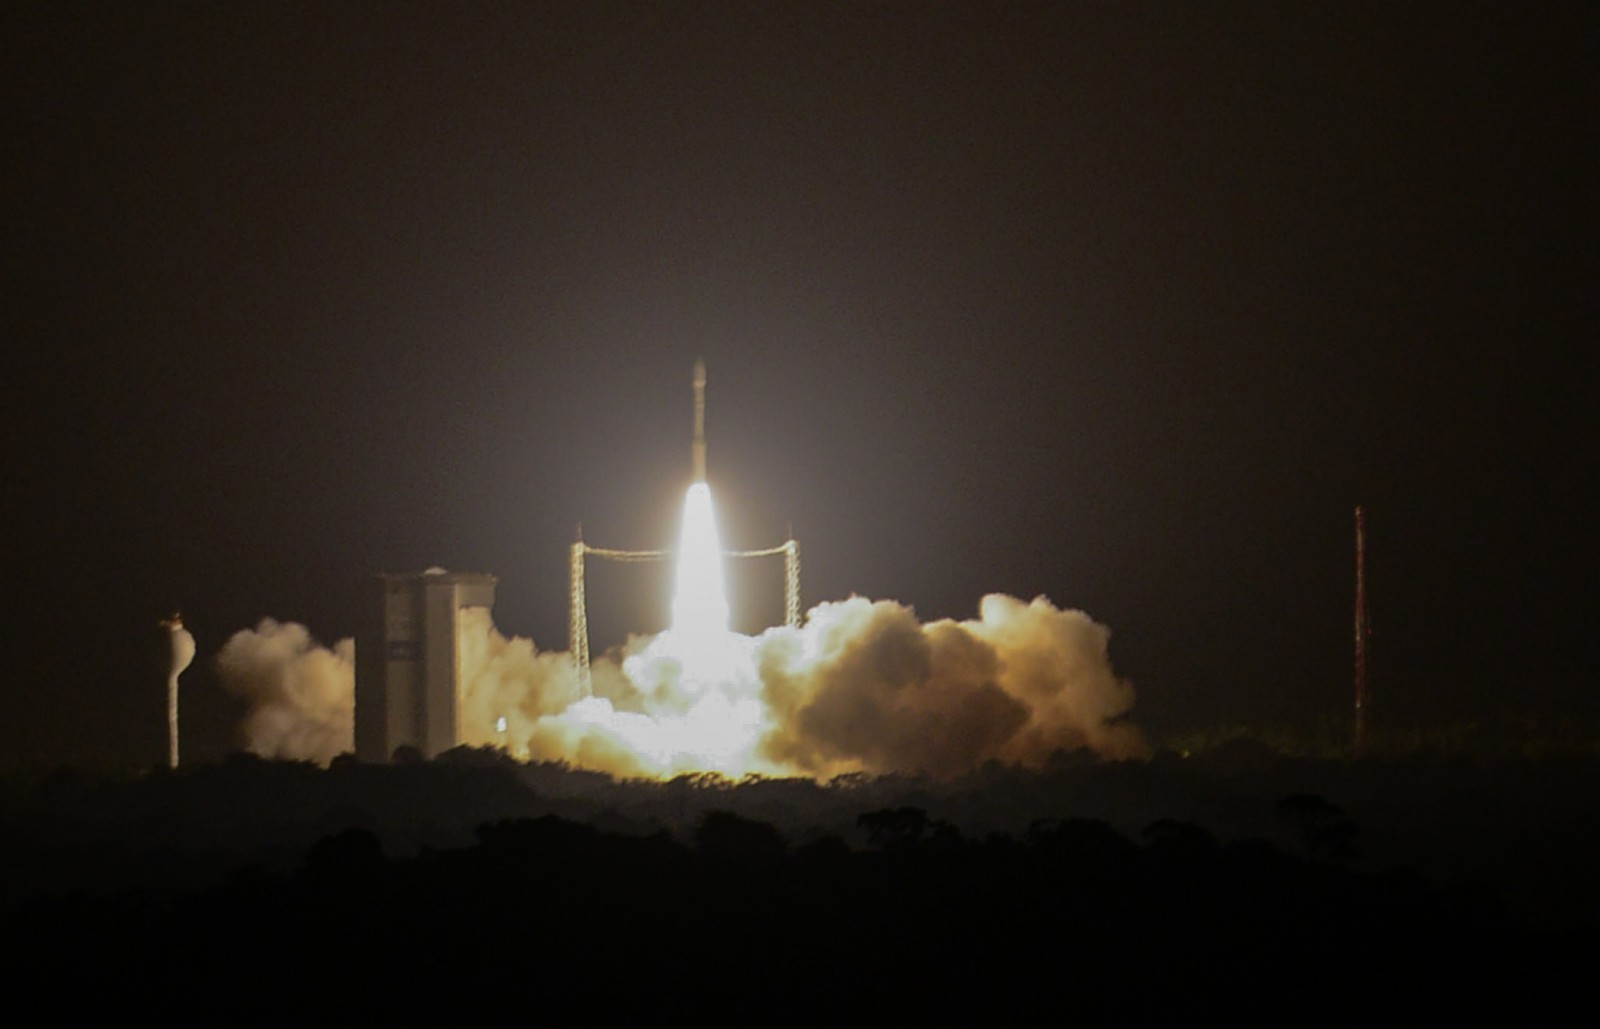 Vega - VV07 - PeruSAT-1 - Skysat - Terra Bella - CONIDA - Airbus Defence and Space - Arianespace - CSG - Kourou - 16 septembre 2016 - Launch - décollage - lancement